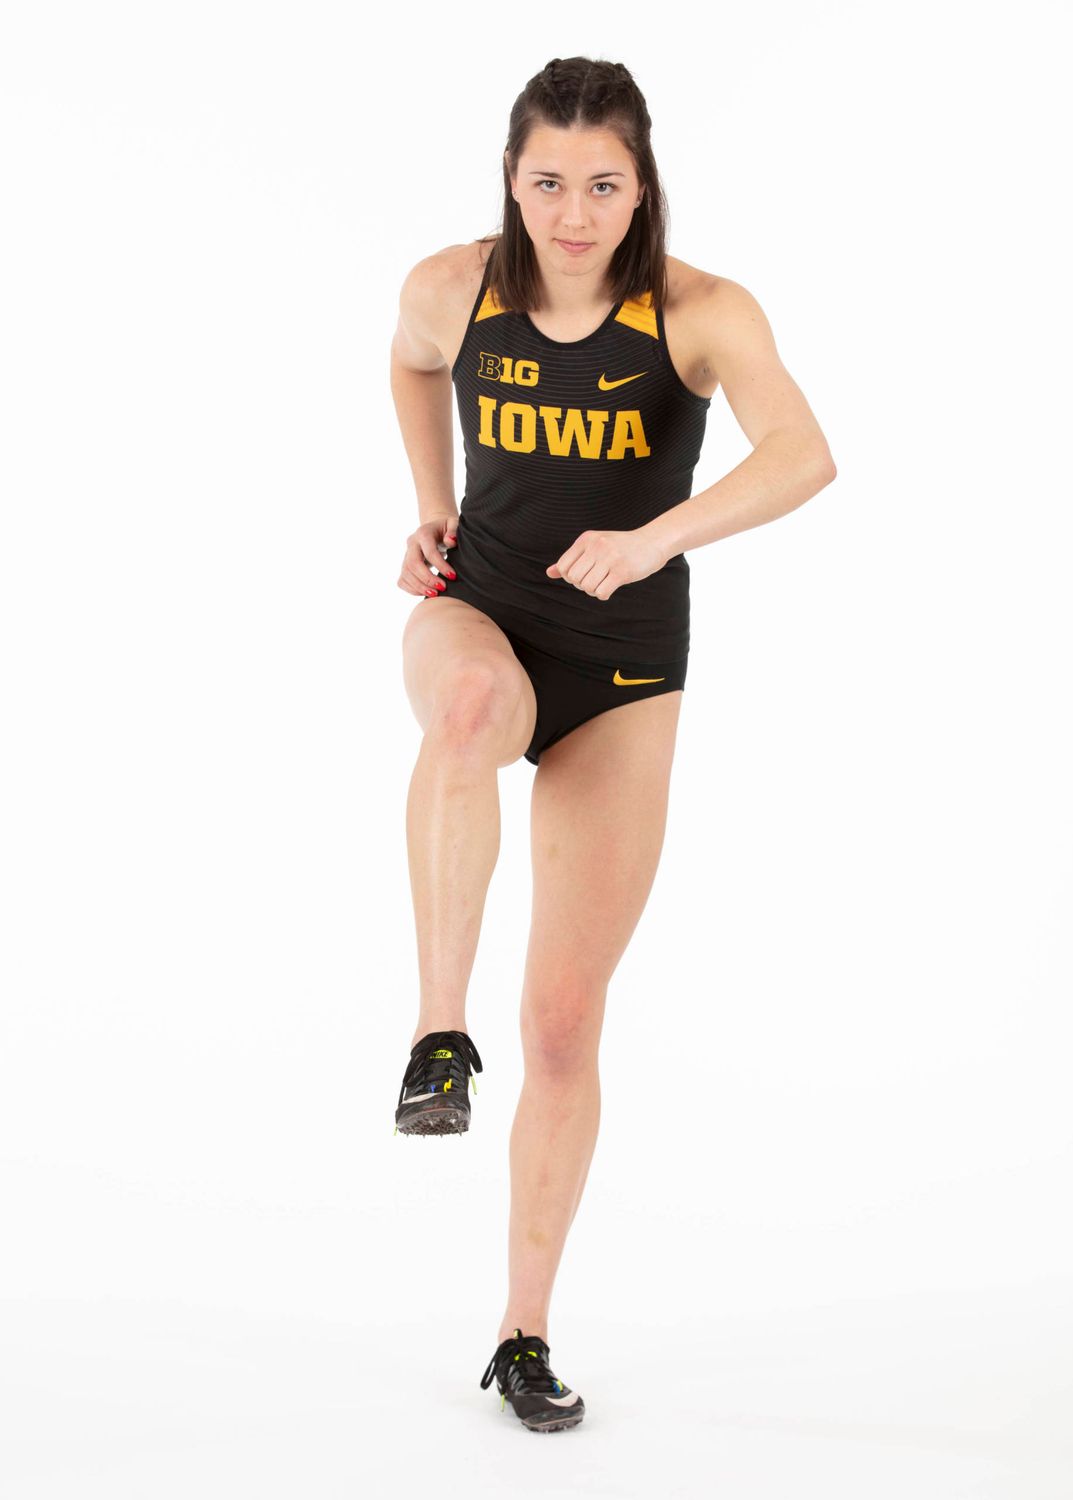 Women's Track and Field Uniforms – University of Iowa Athletics